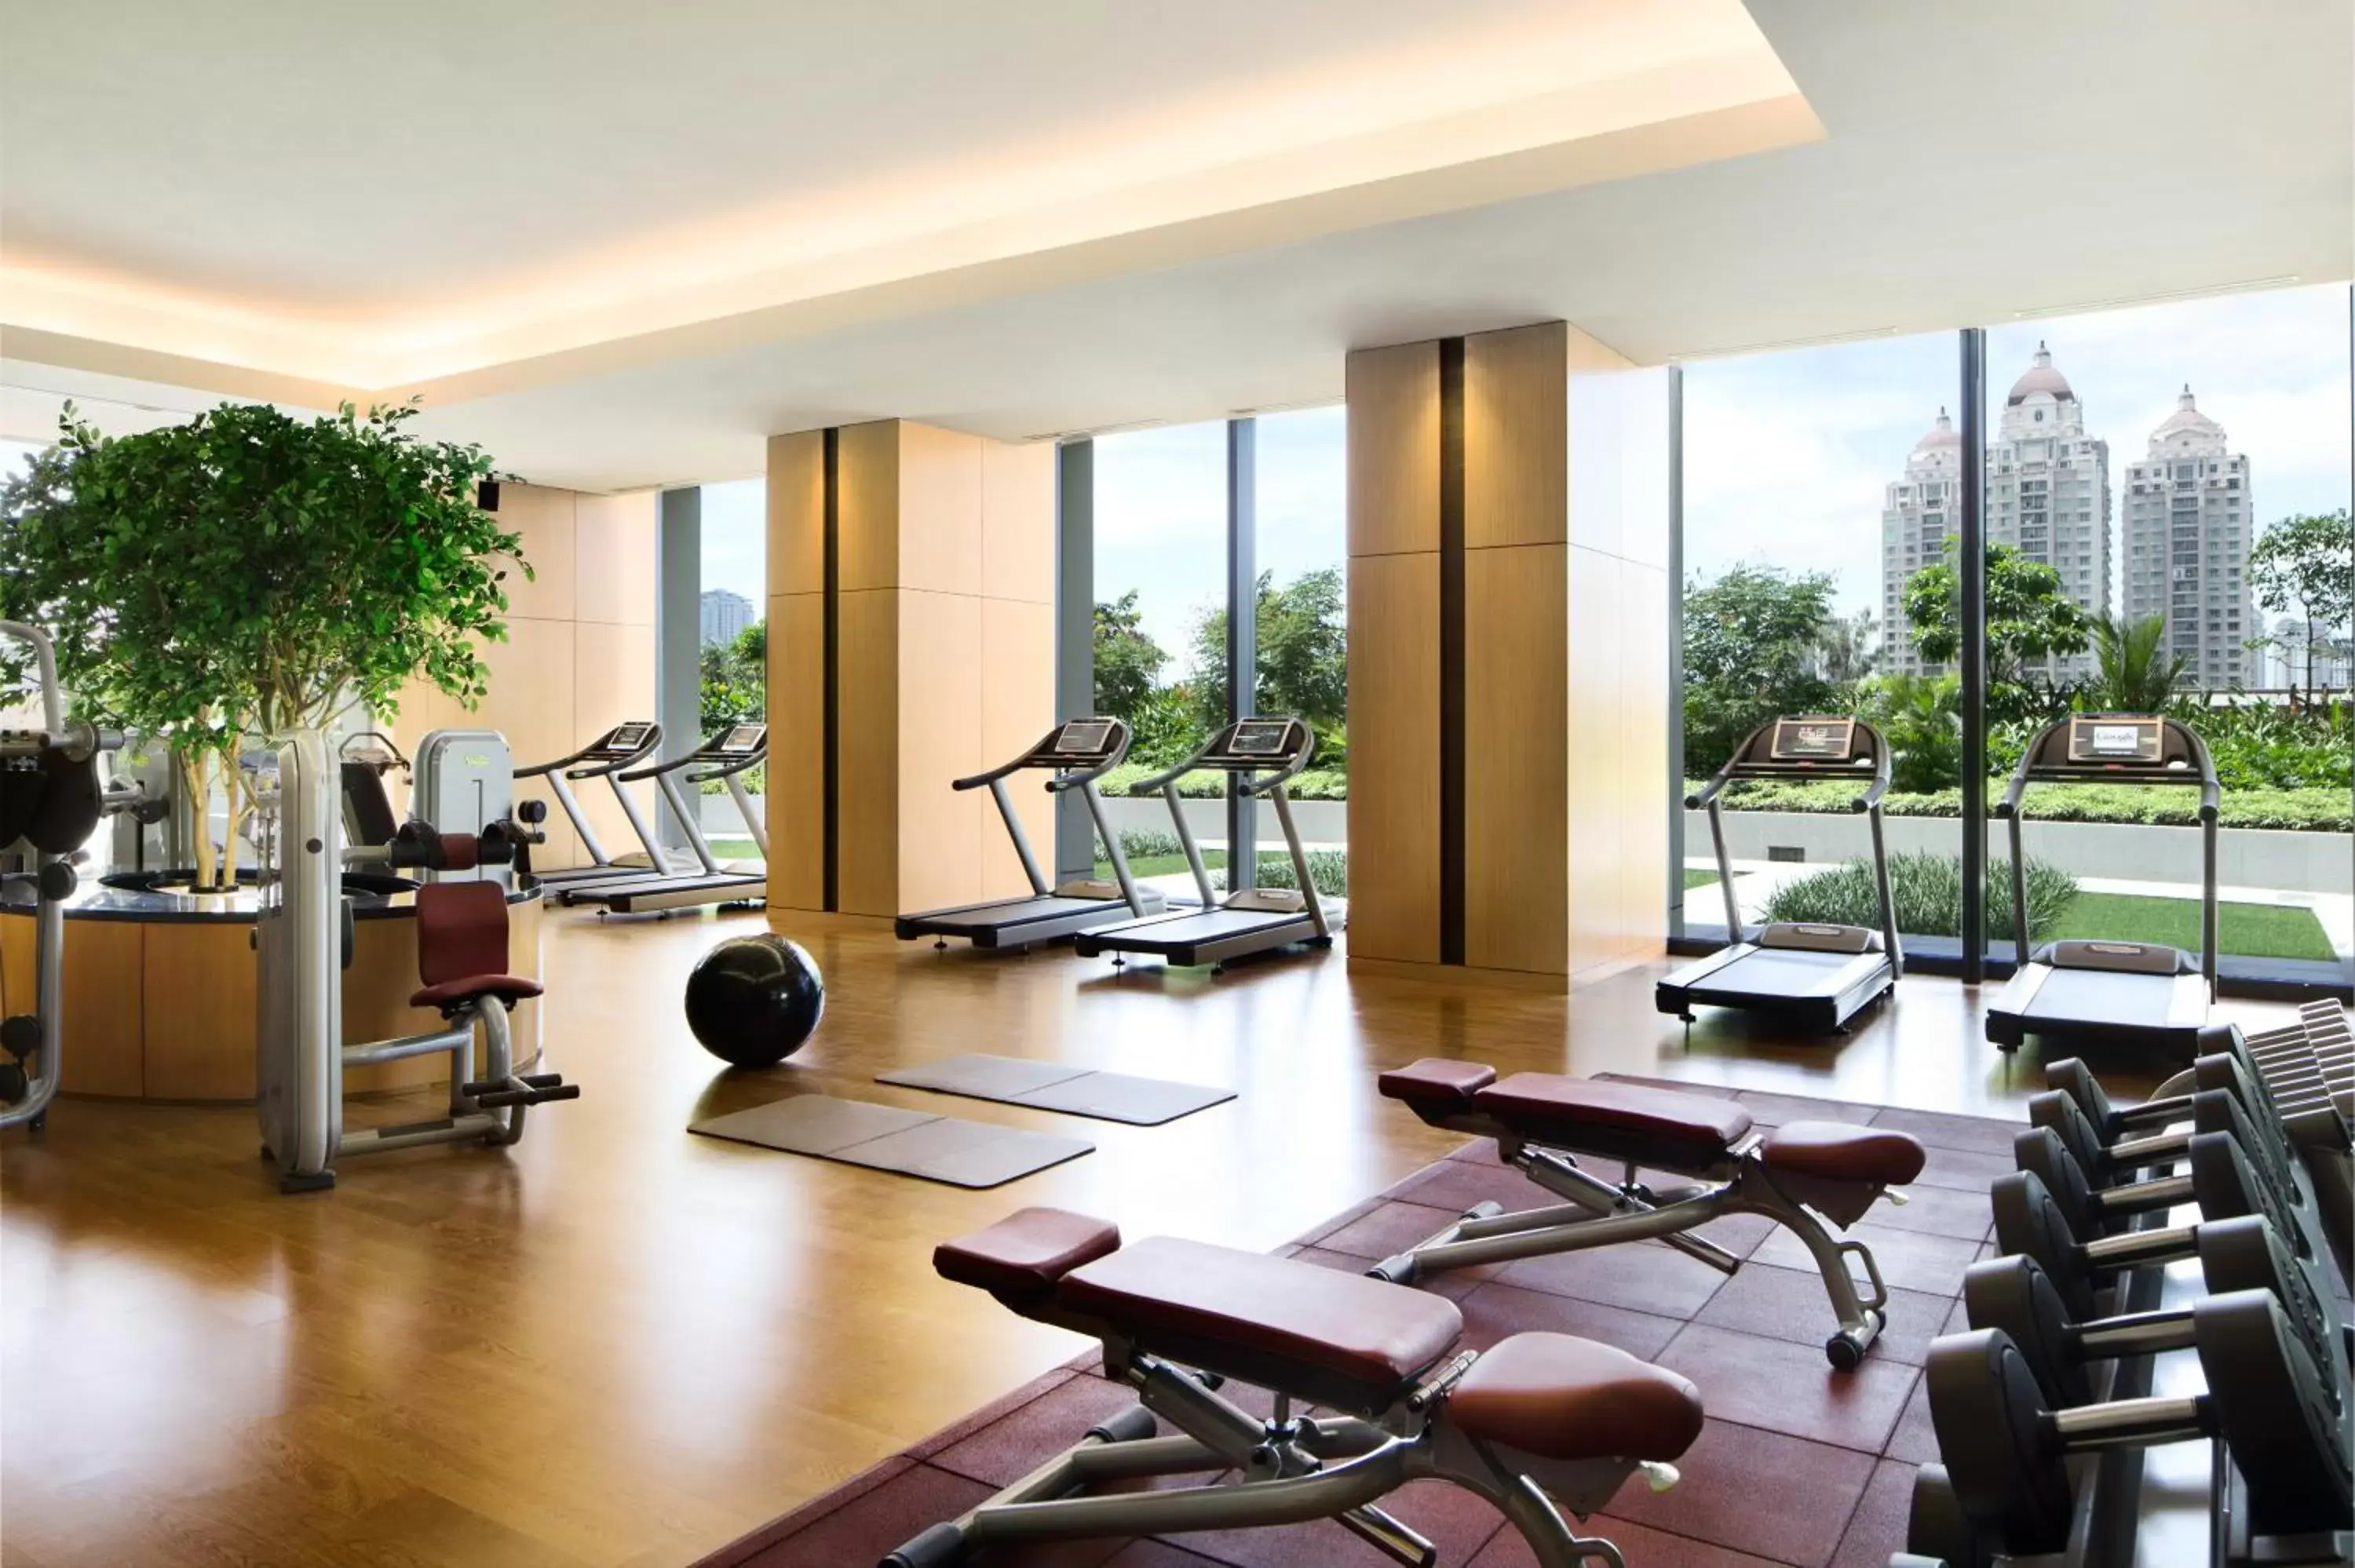 Fitness centre/facilities, Fitness Center/Facilities in Fairmont Jakarta